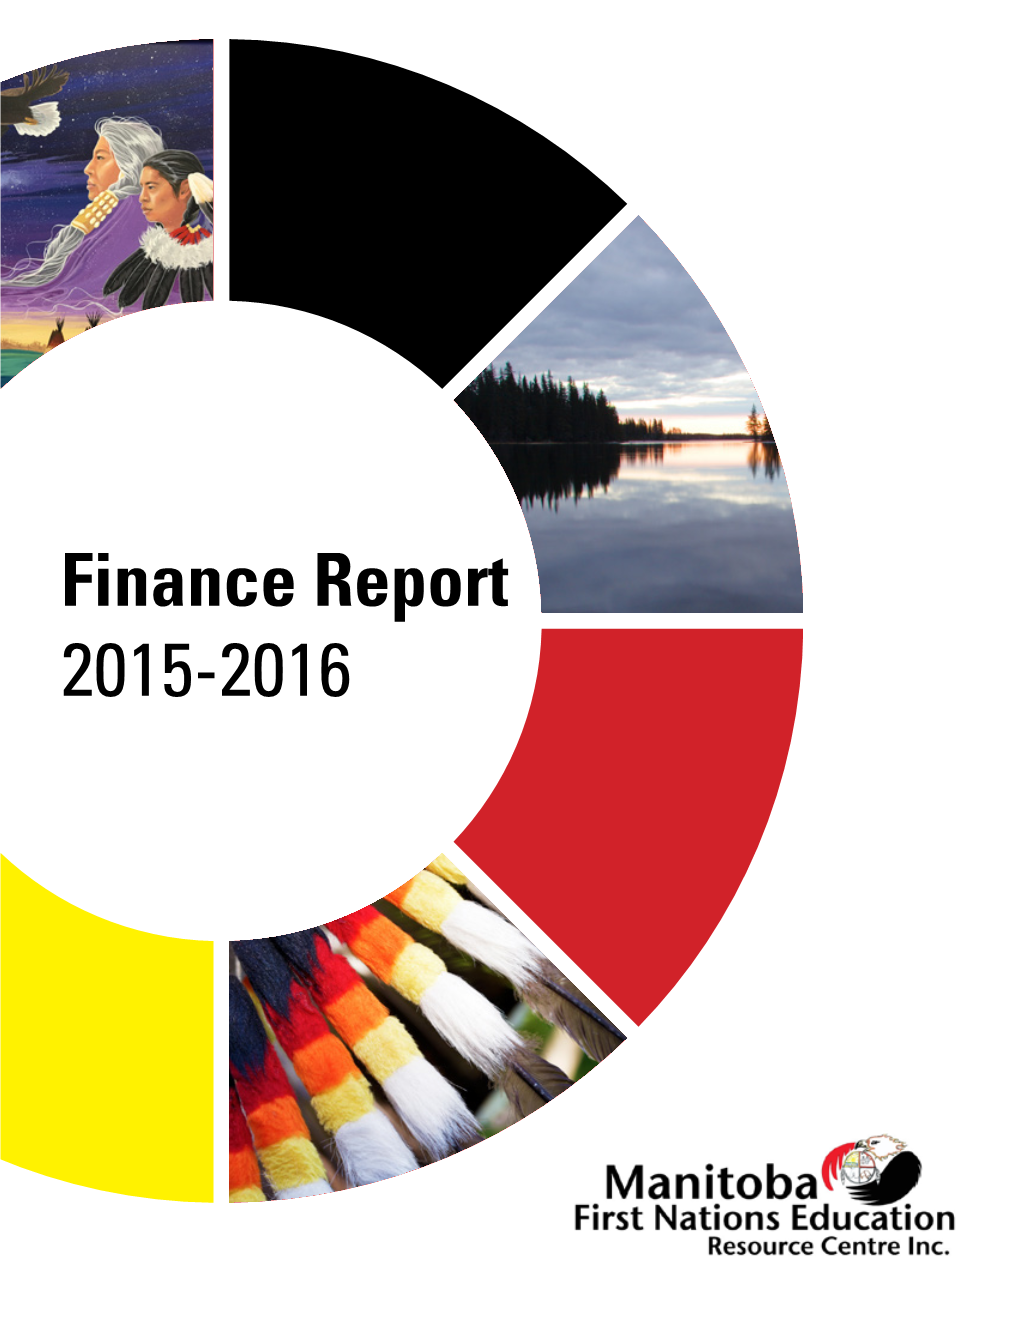 Finance Report 2015-2016